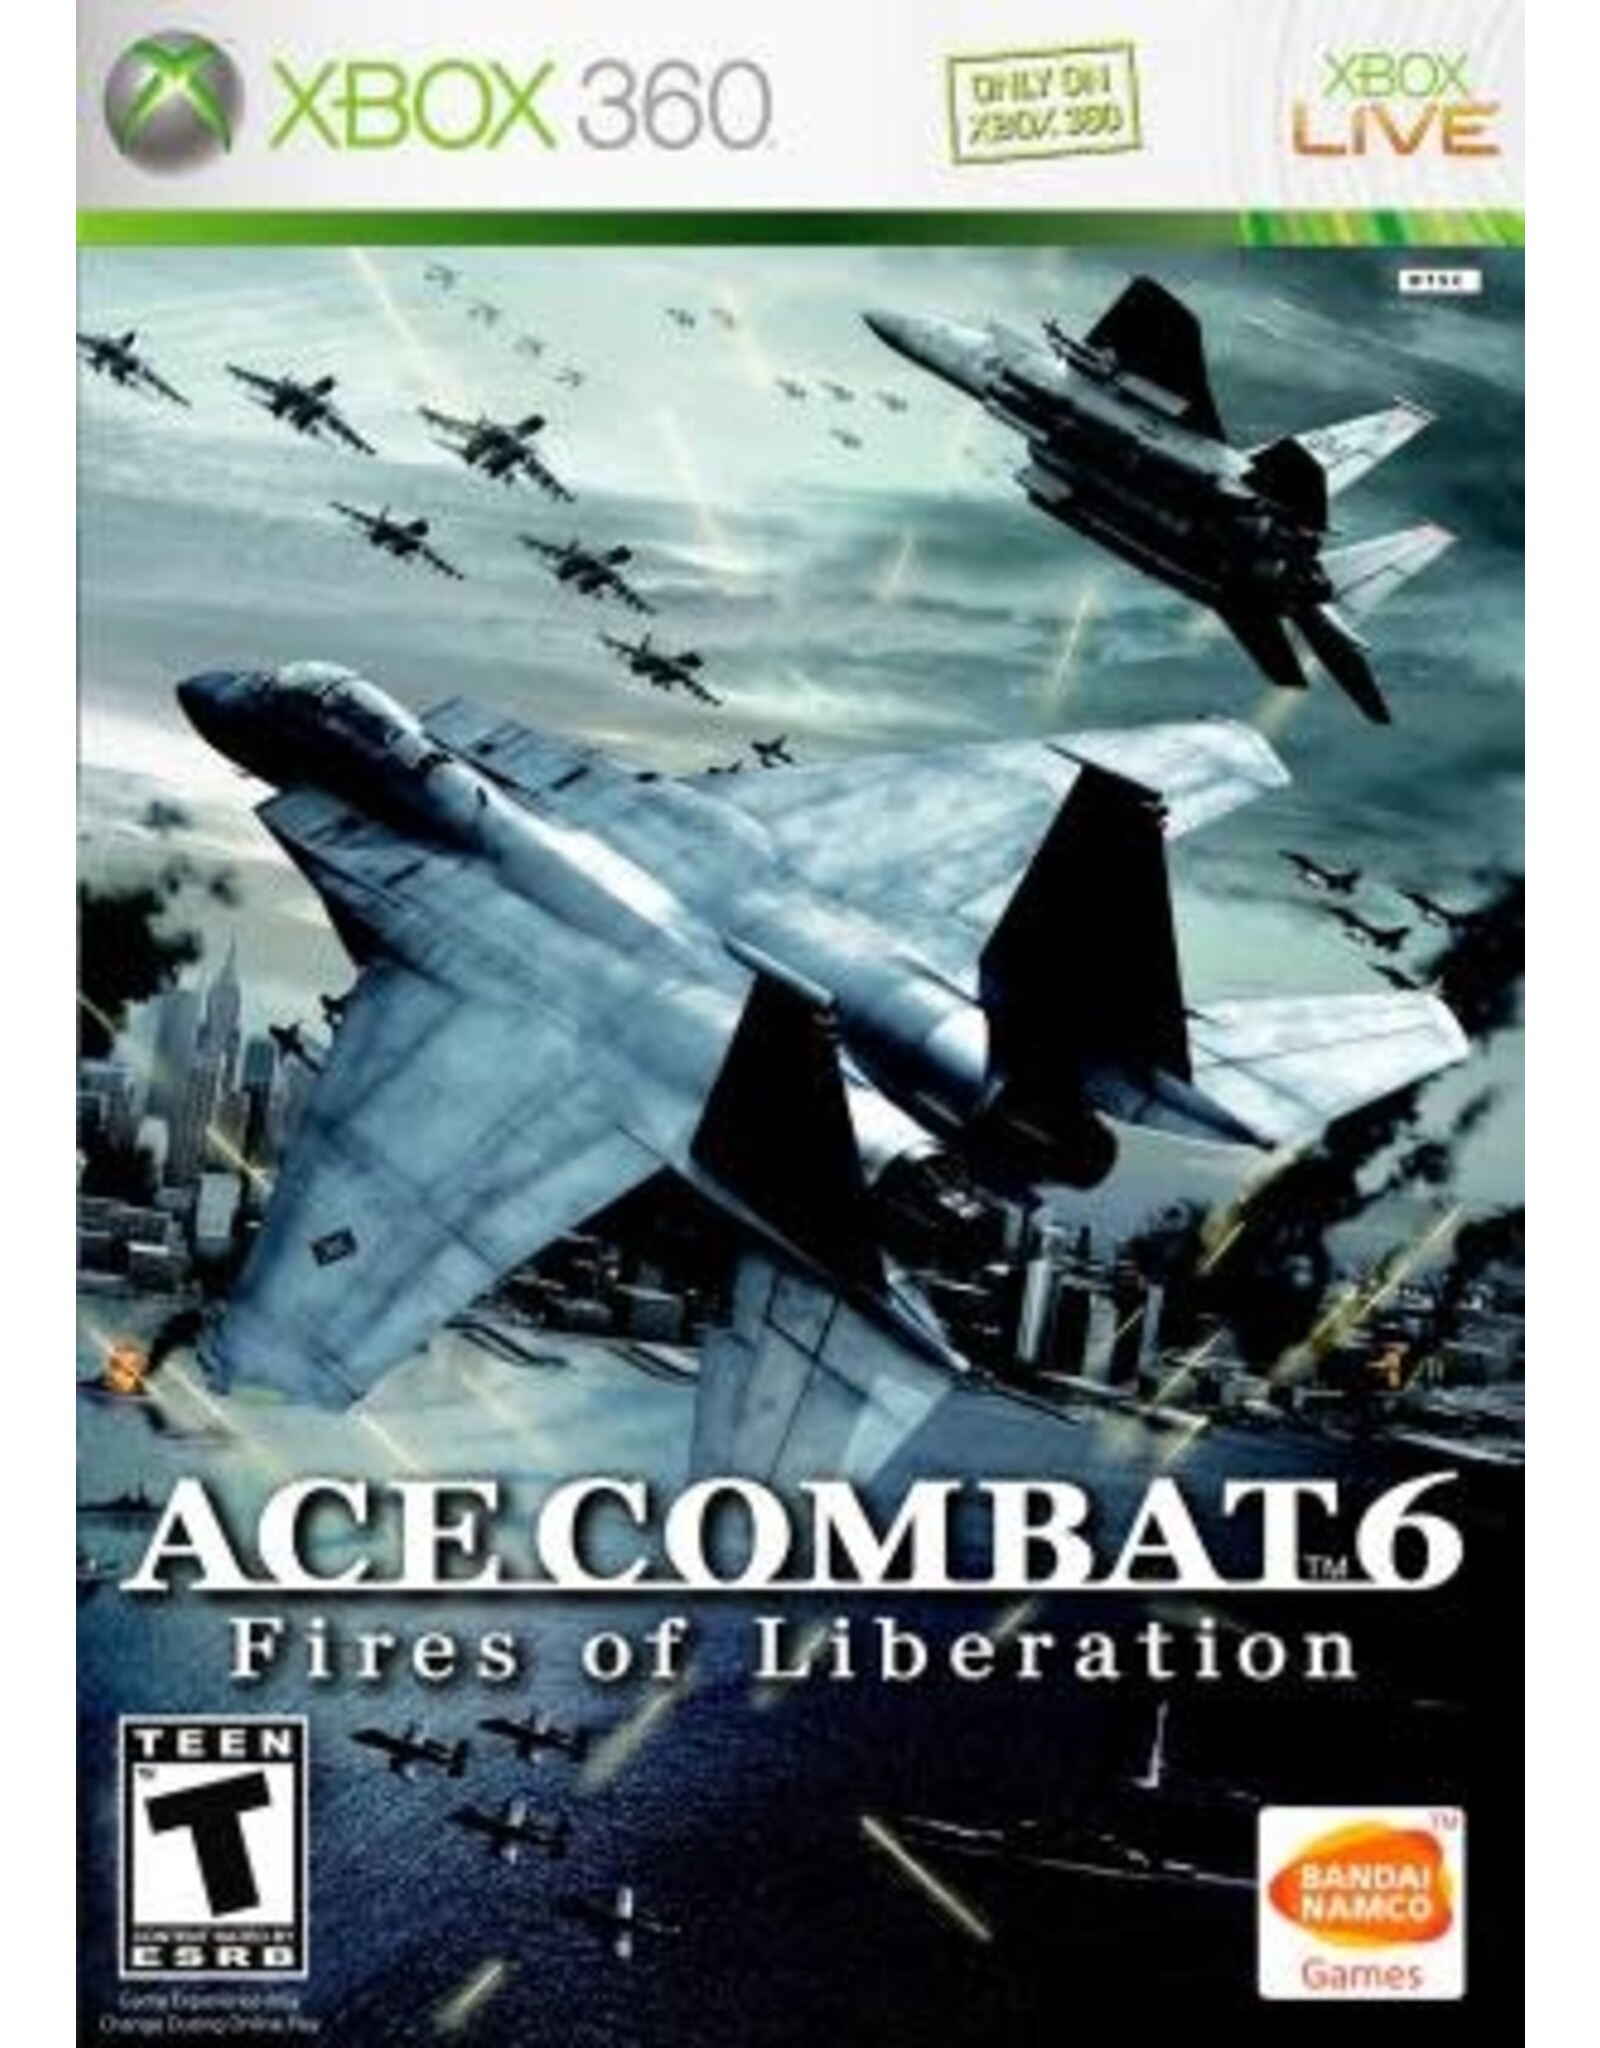 Xbox 360 Ace Combat 6 Fires of Liberation (CiB)